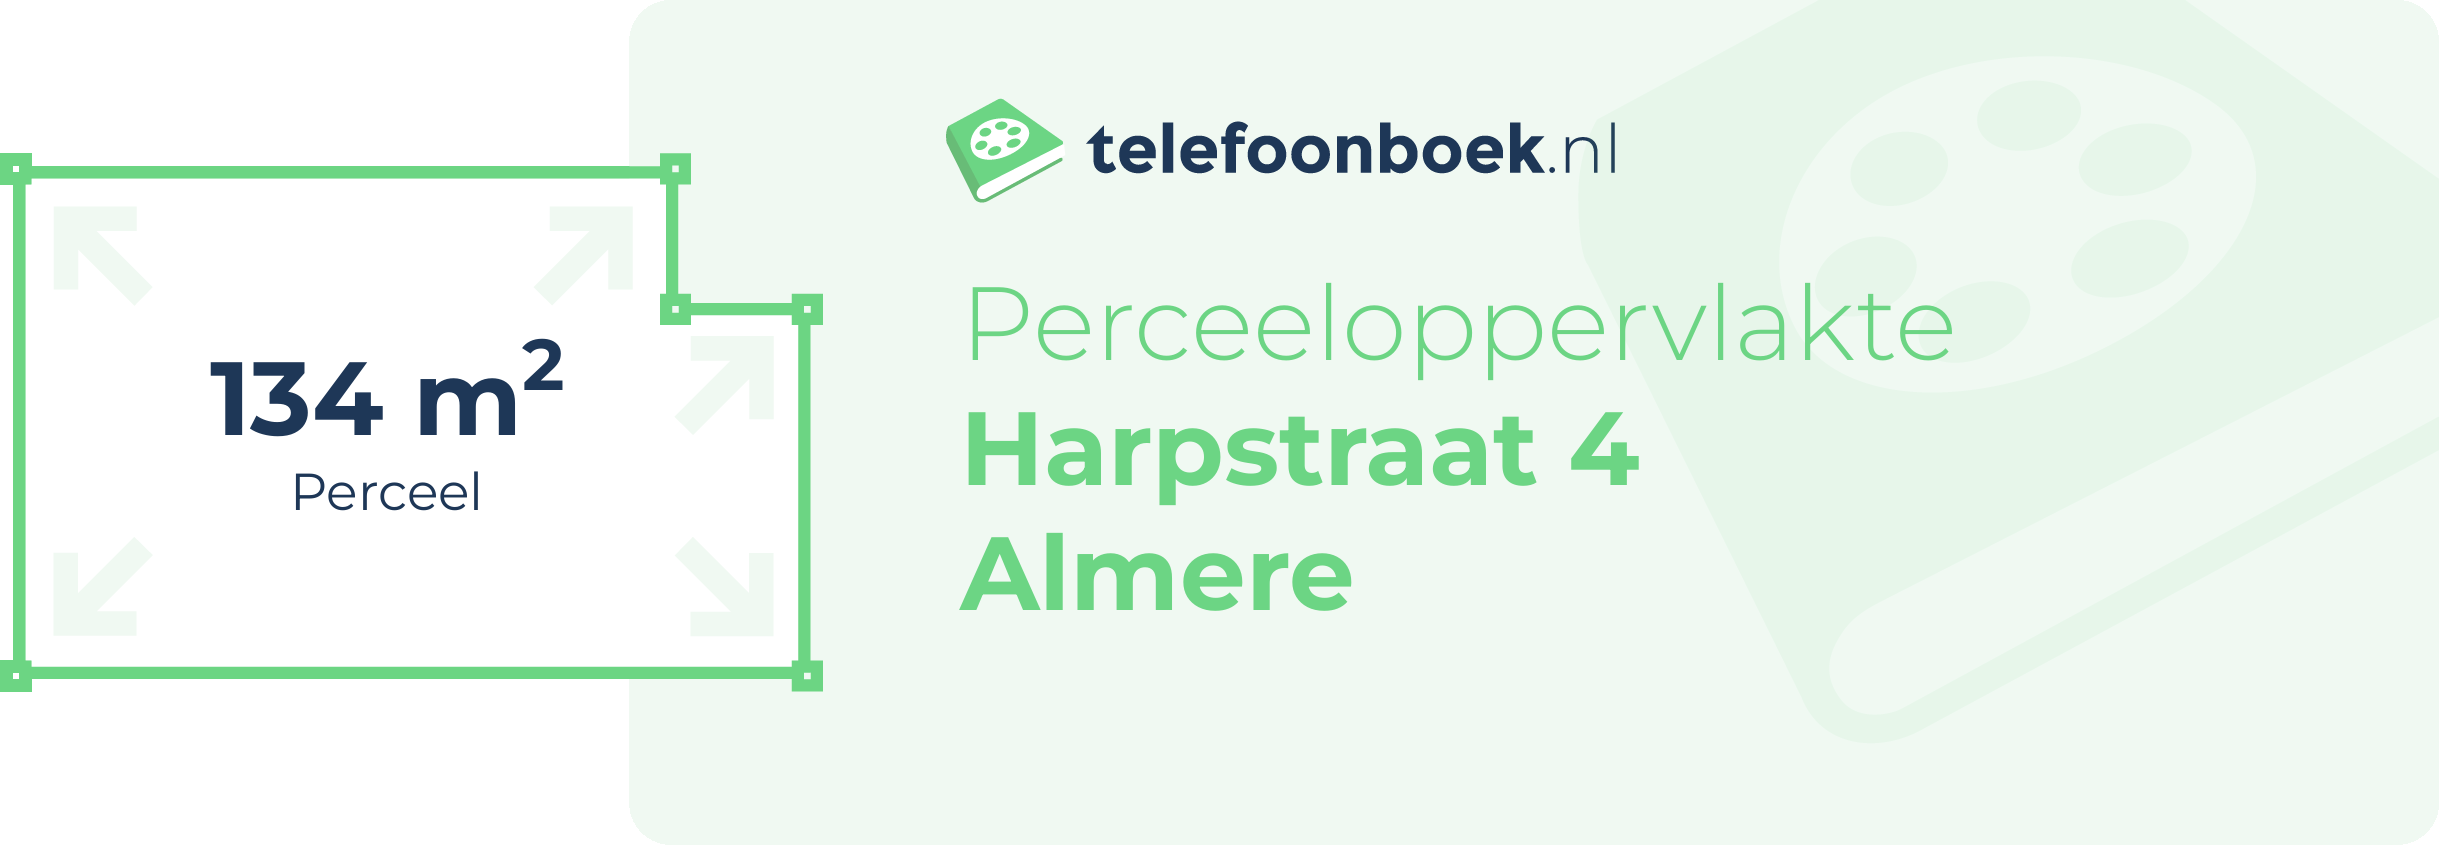 Perceeloppervlakte Harpstraat 4 Almere